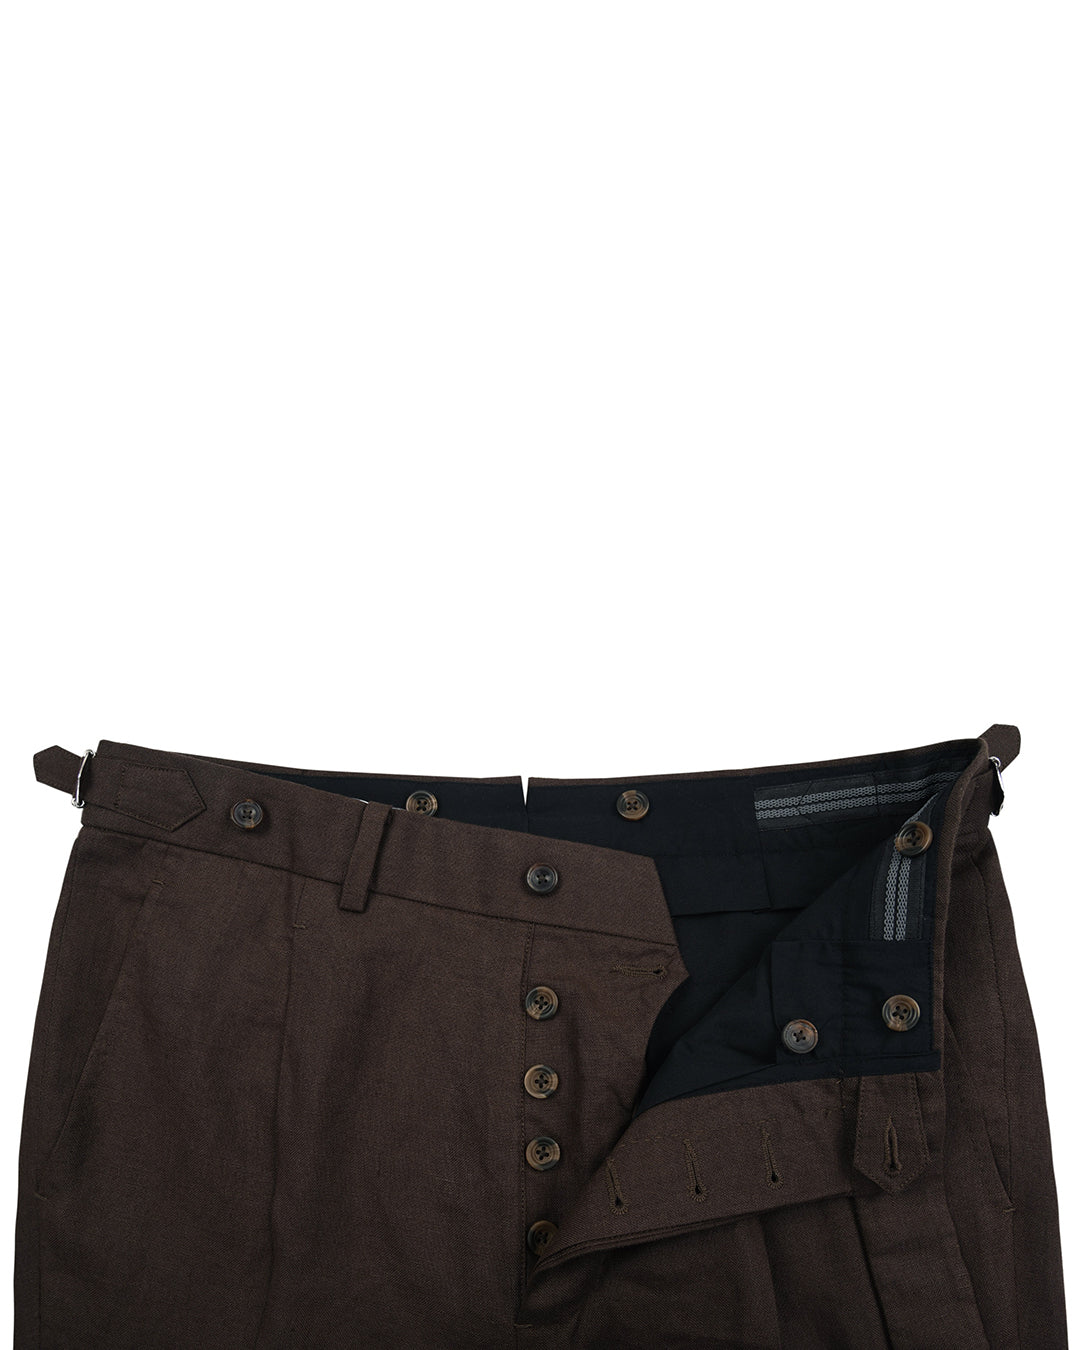 Front open view of custom linen pants for men by Luxire in dark brown